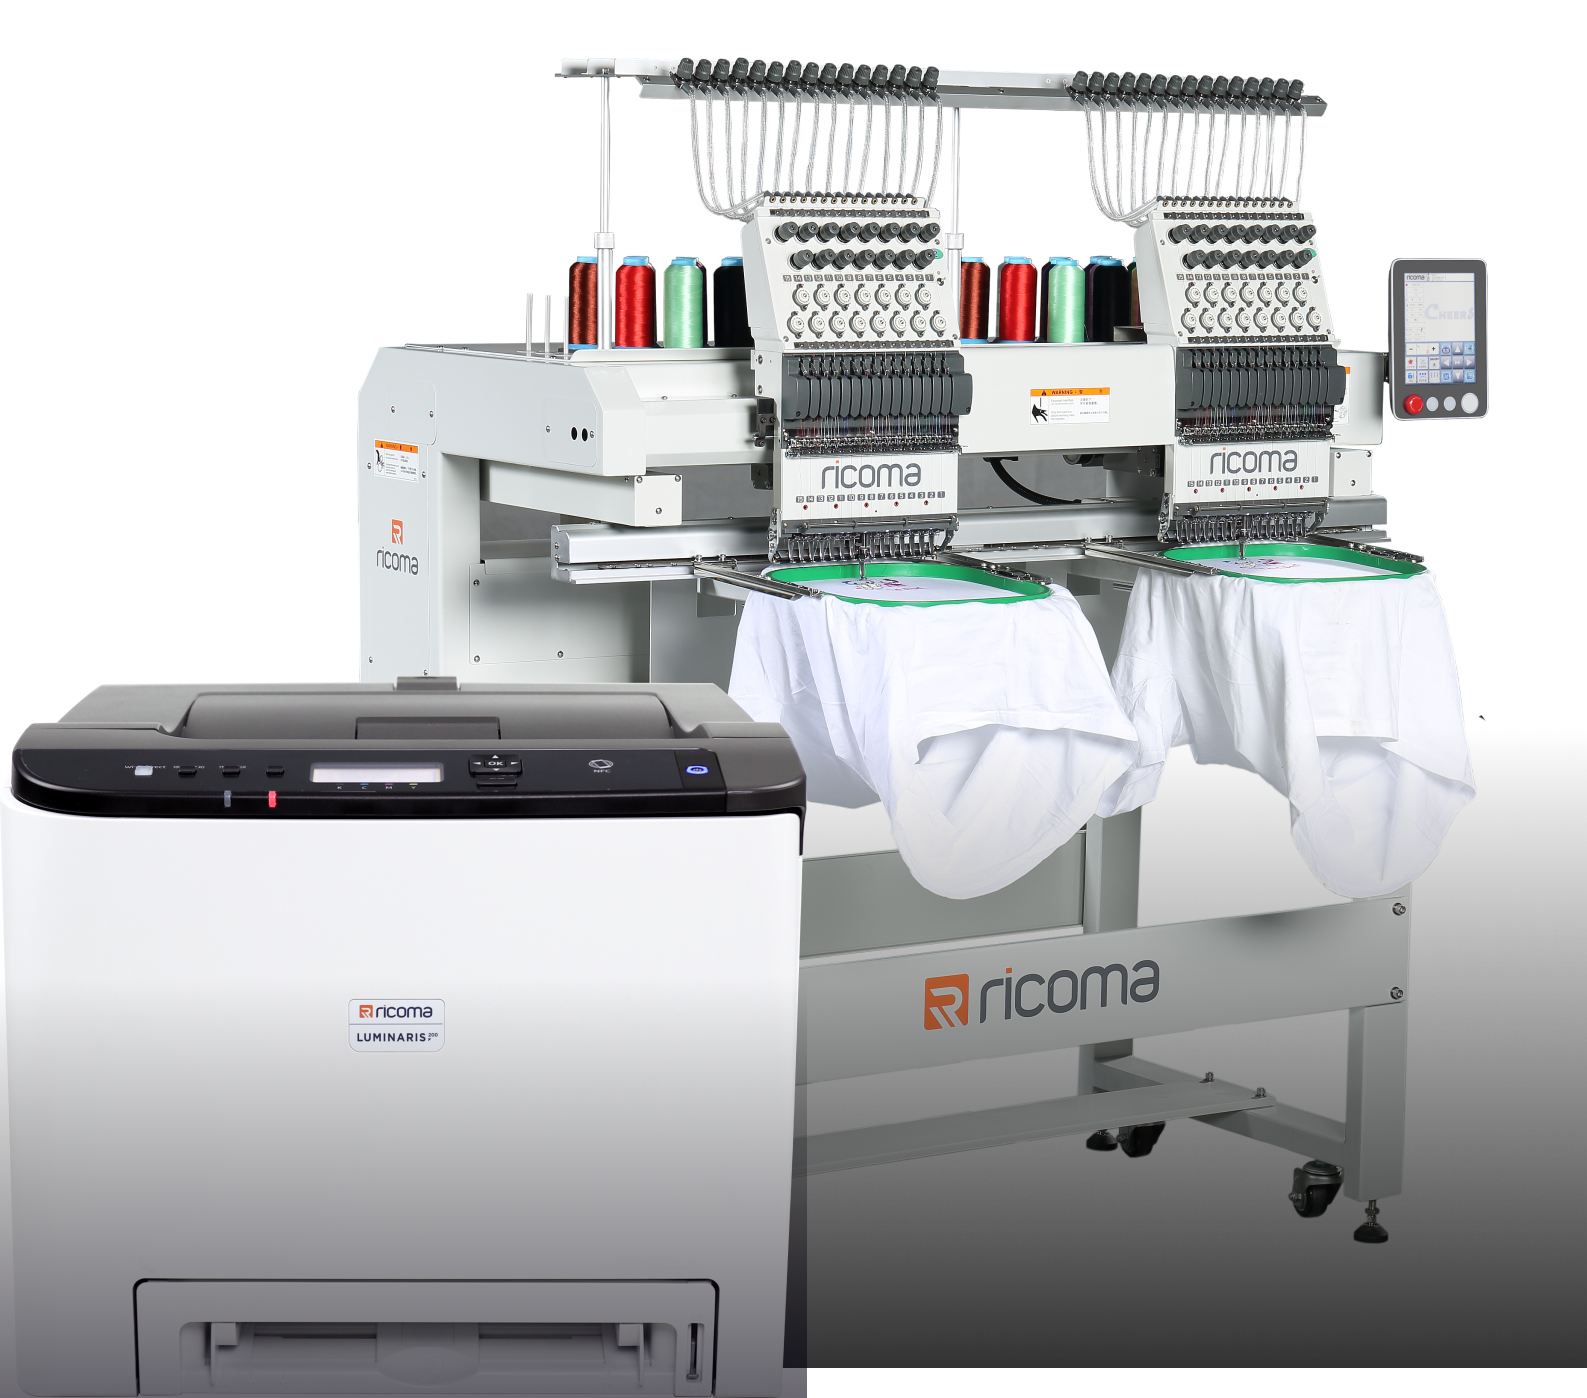 Impresión directa a prenda en 3 sencillos pasos con la impresora textil  Ricoh Ri1000